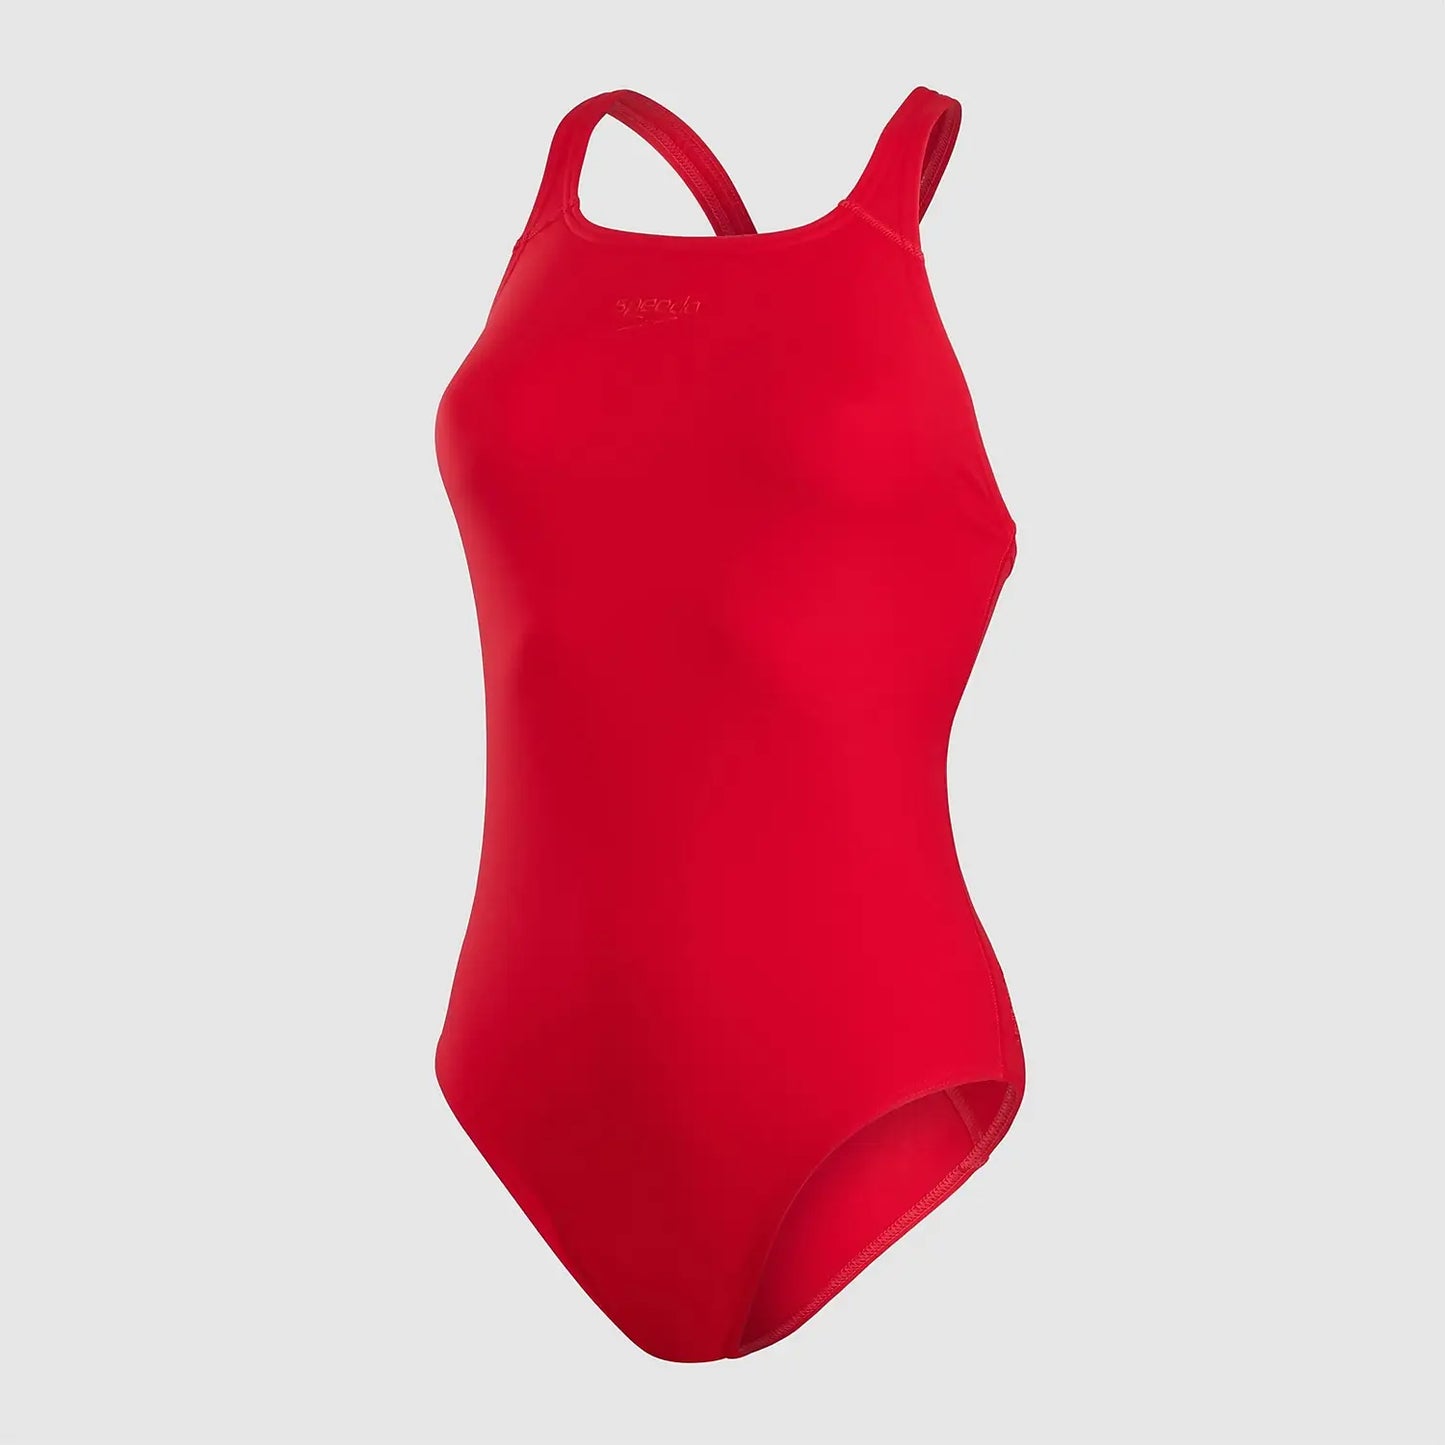 Speedo - Eco Endurance Medalist Swimsuit - Red